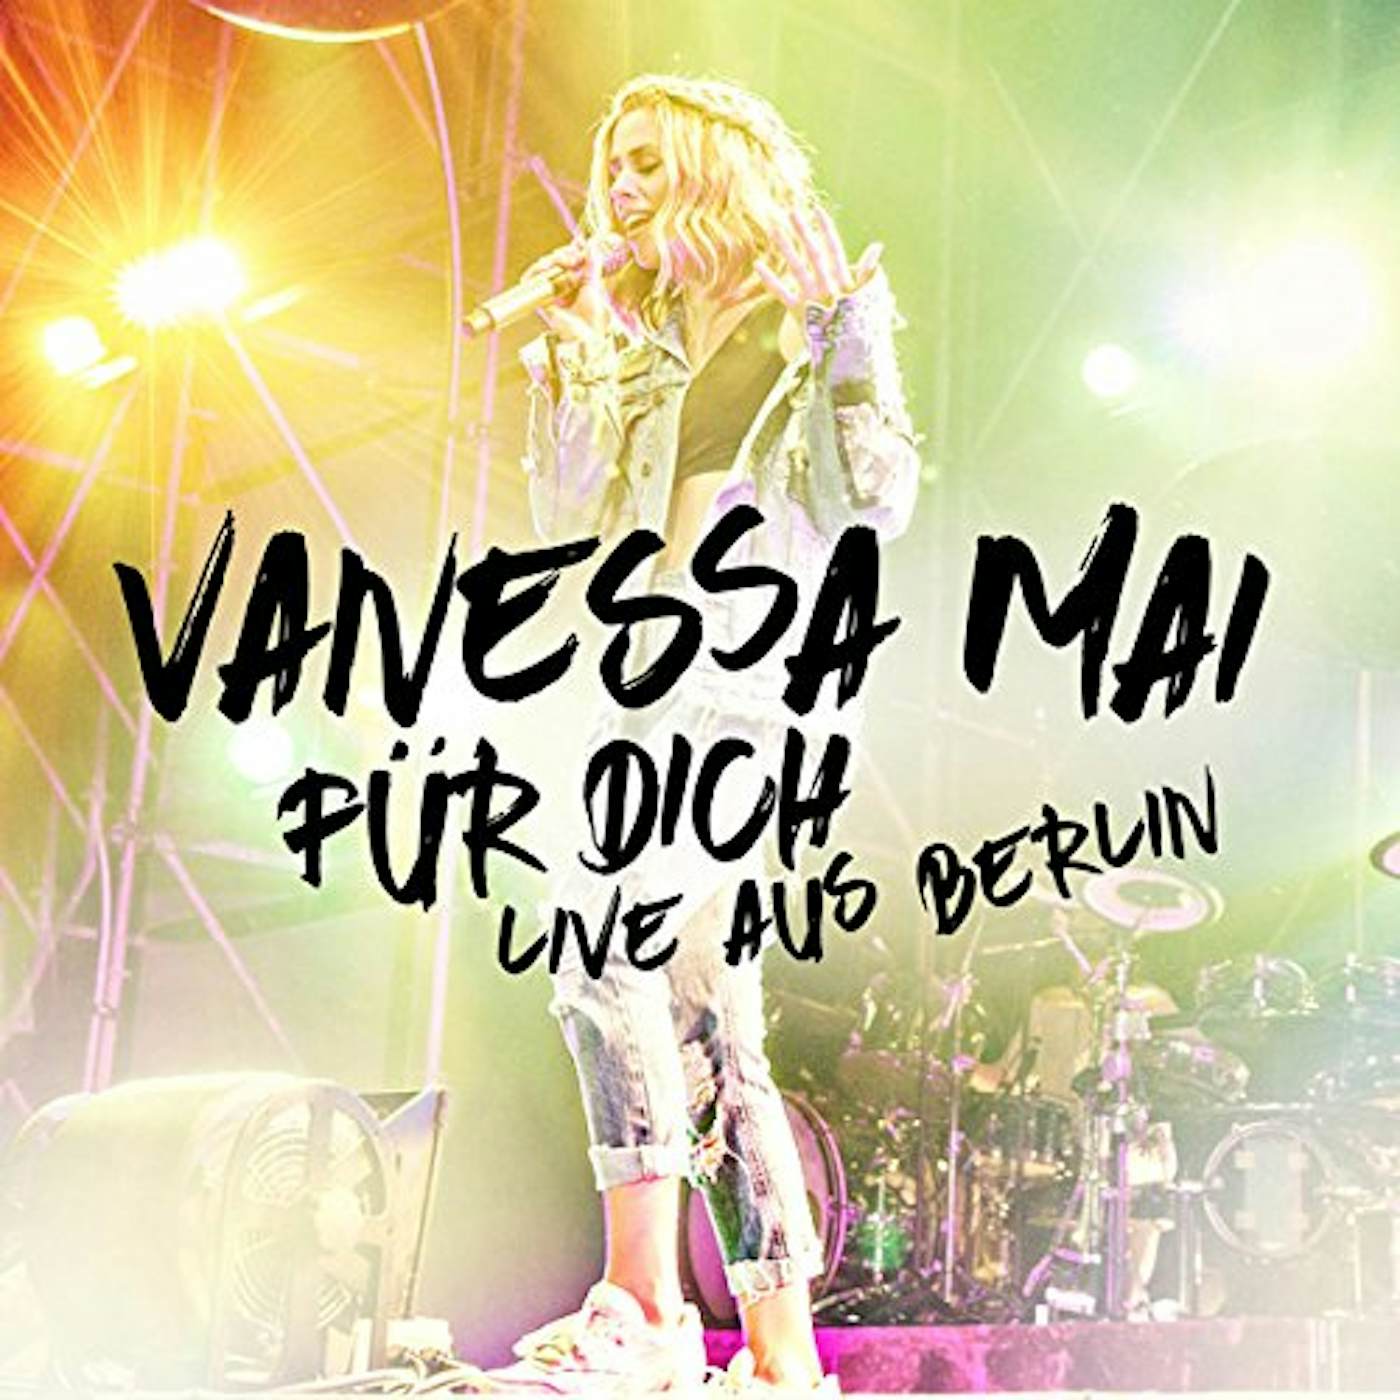 Vanessa Mai FUR DICH: LIVE AUS BERLIN CD